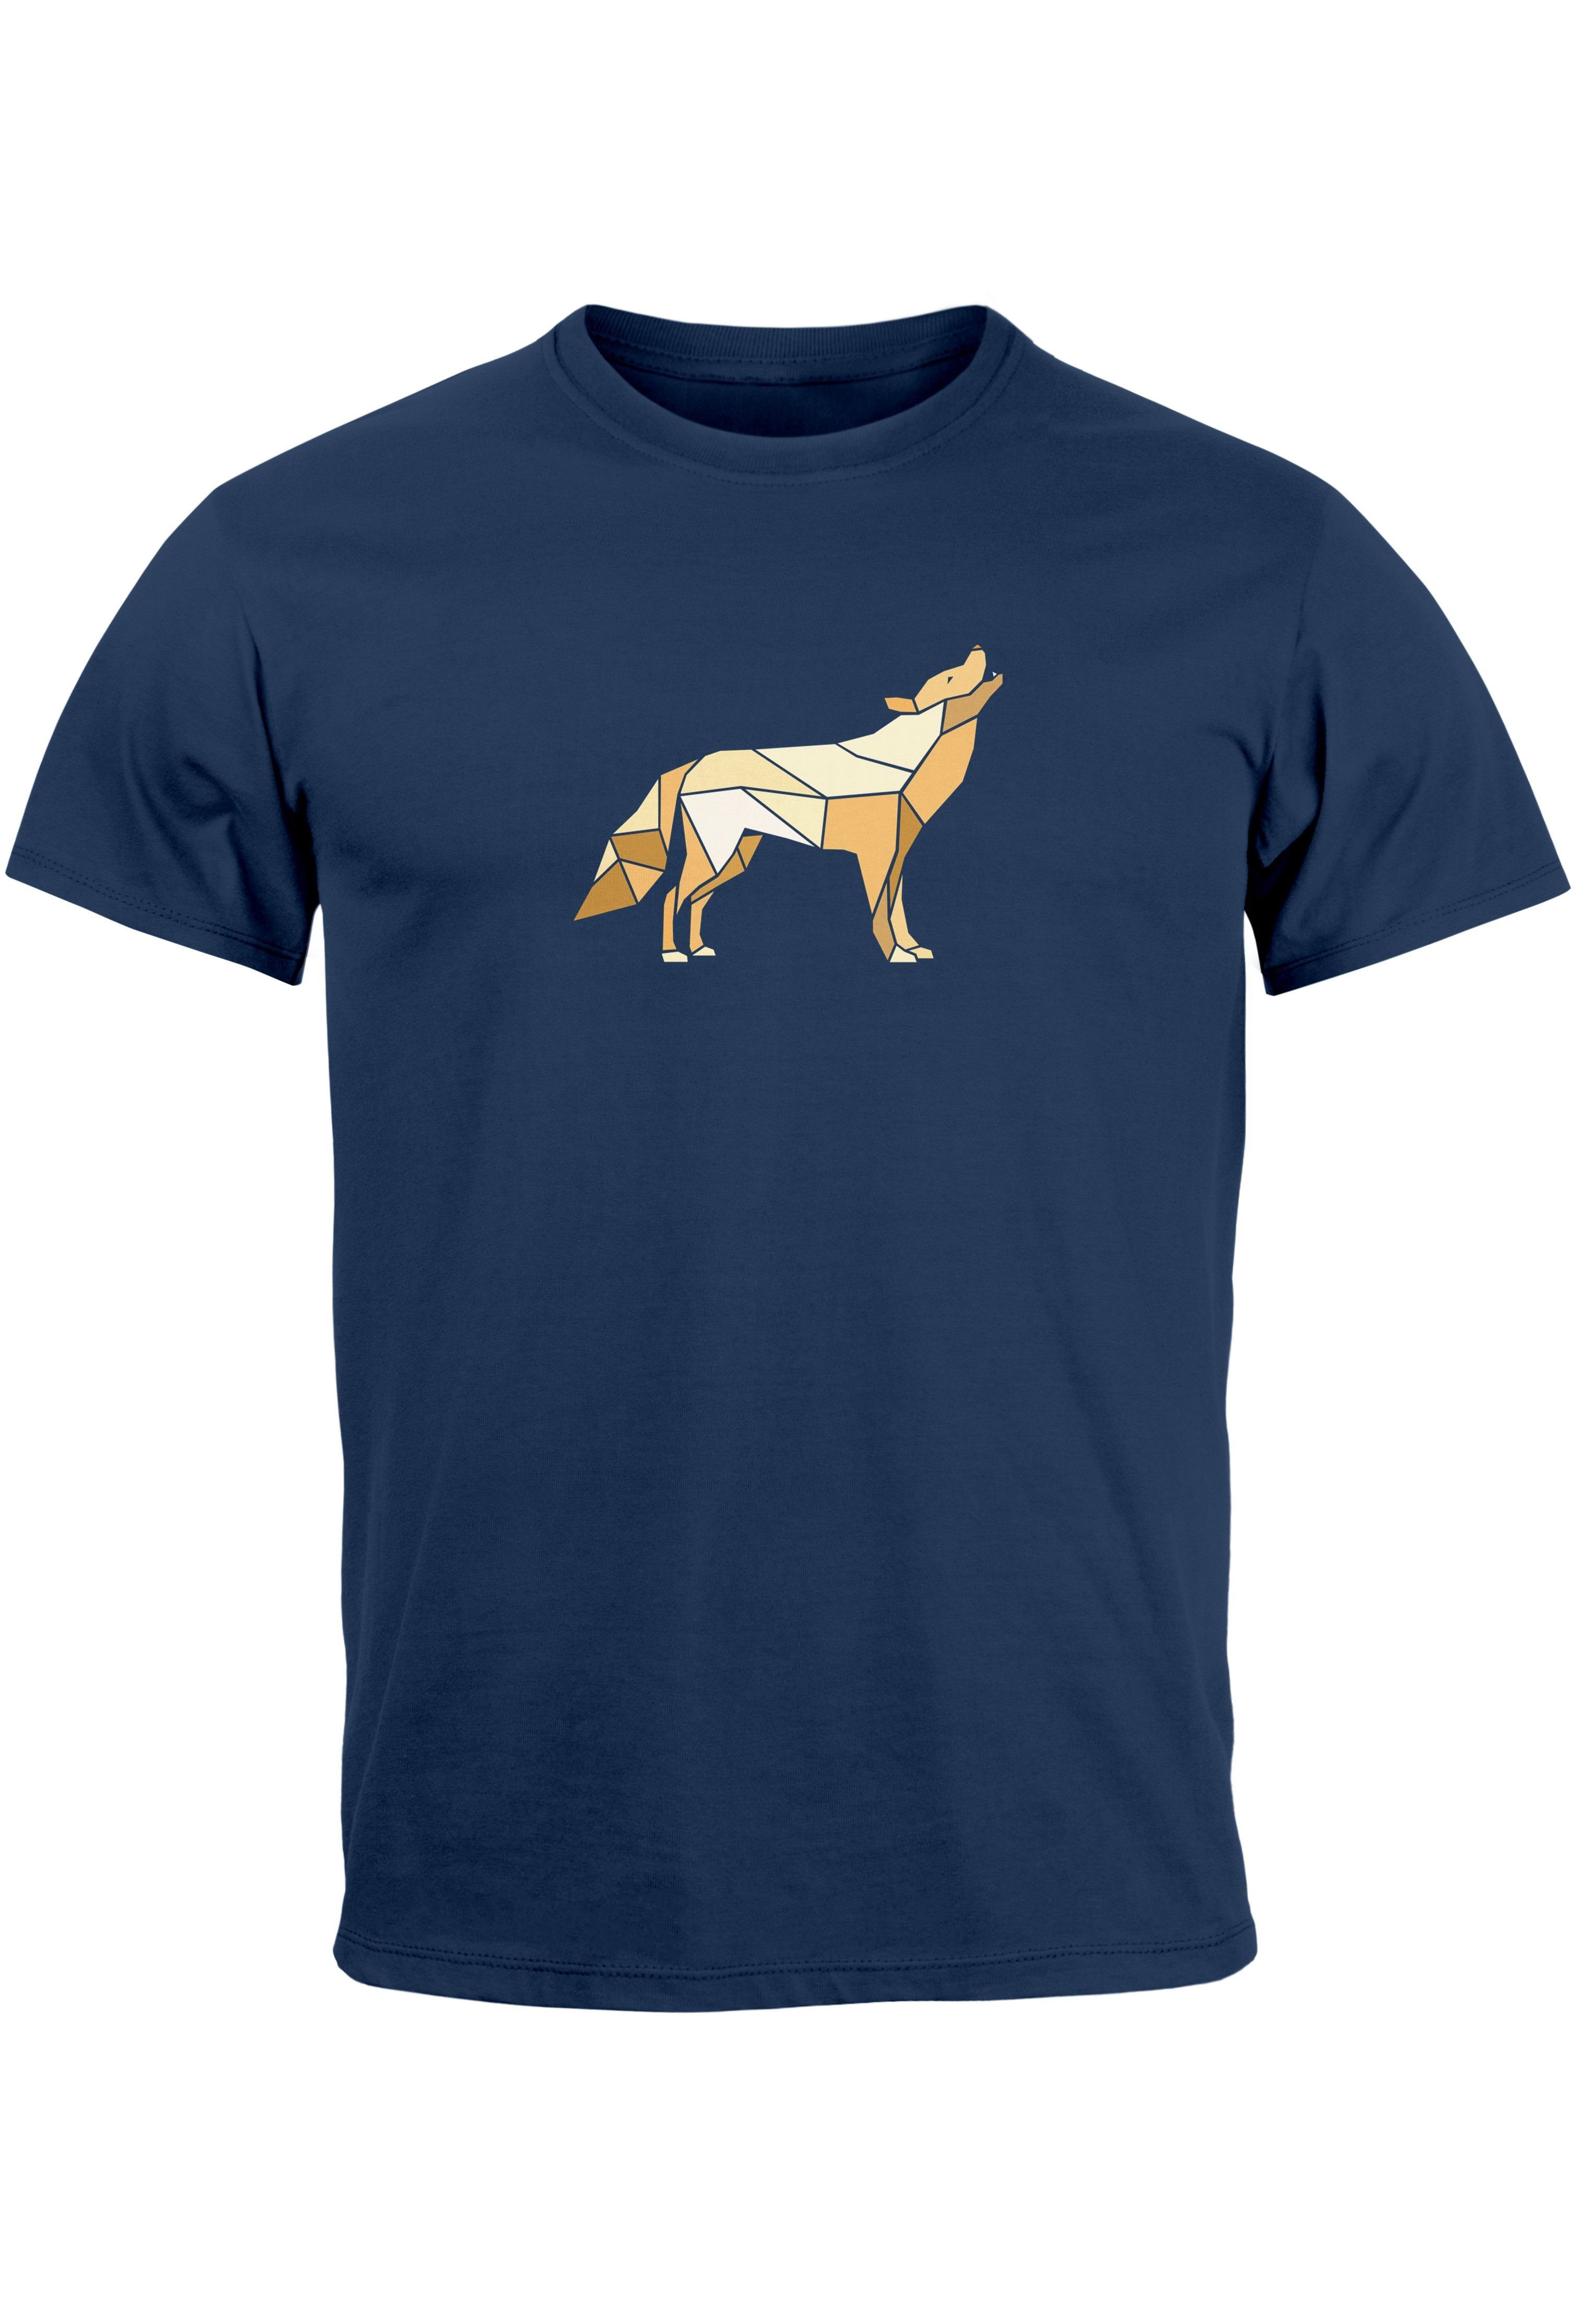 Print-Shirt Print Fashion T-Shirt Herren Neverless navy Polygon mit Outdoor Grafik Bedruckt Tiermotiv Wolf